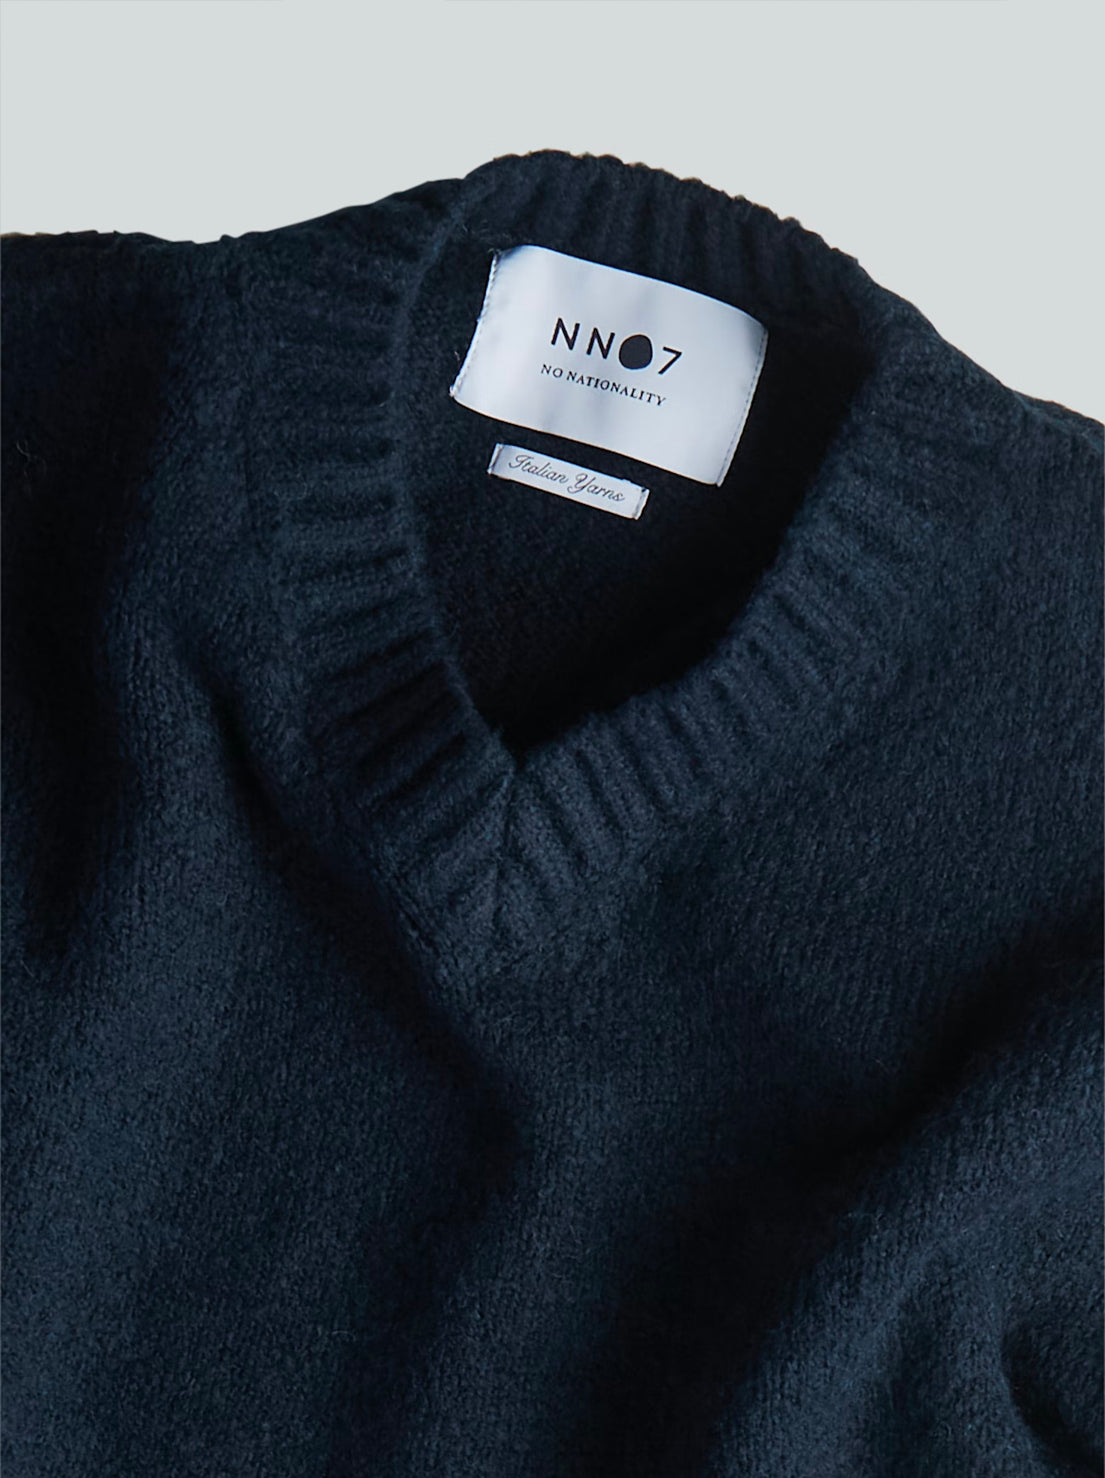 No Nationality - Grayson 6466 - Wool Blend V-Neck Sweater - Navy Blue